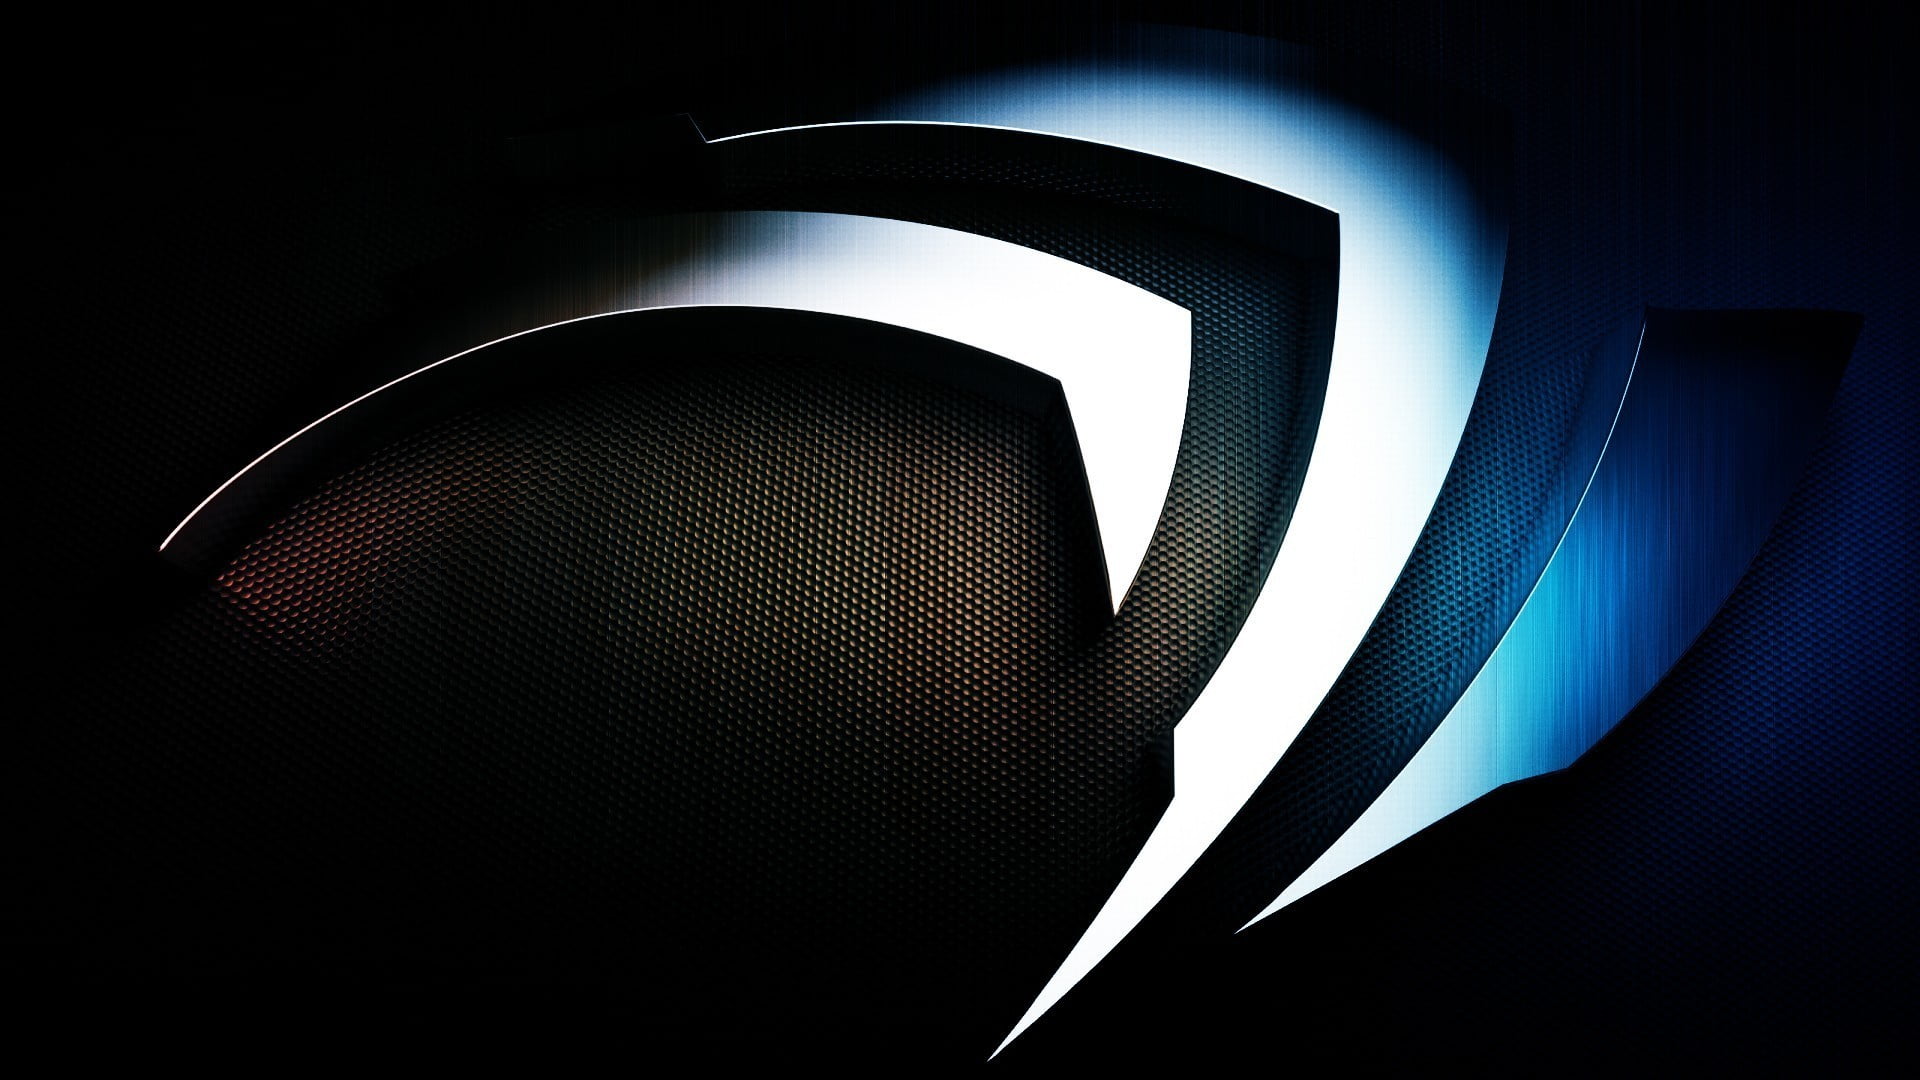 NVIDIA logo wallpaper, technology, blue, close-up, modern, pattern